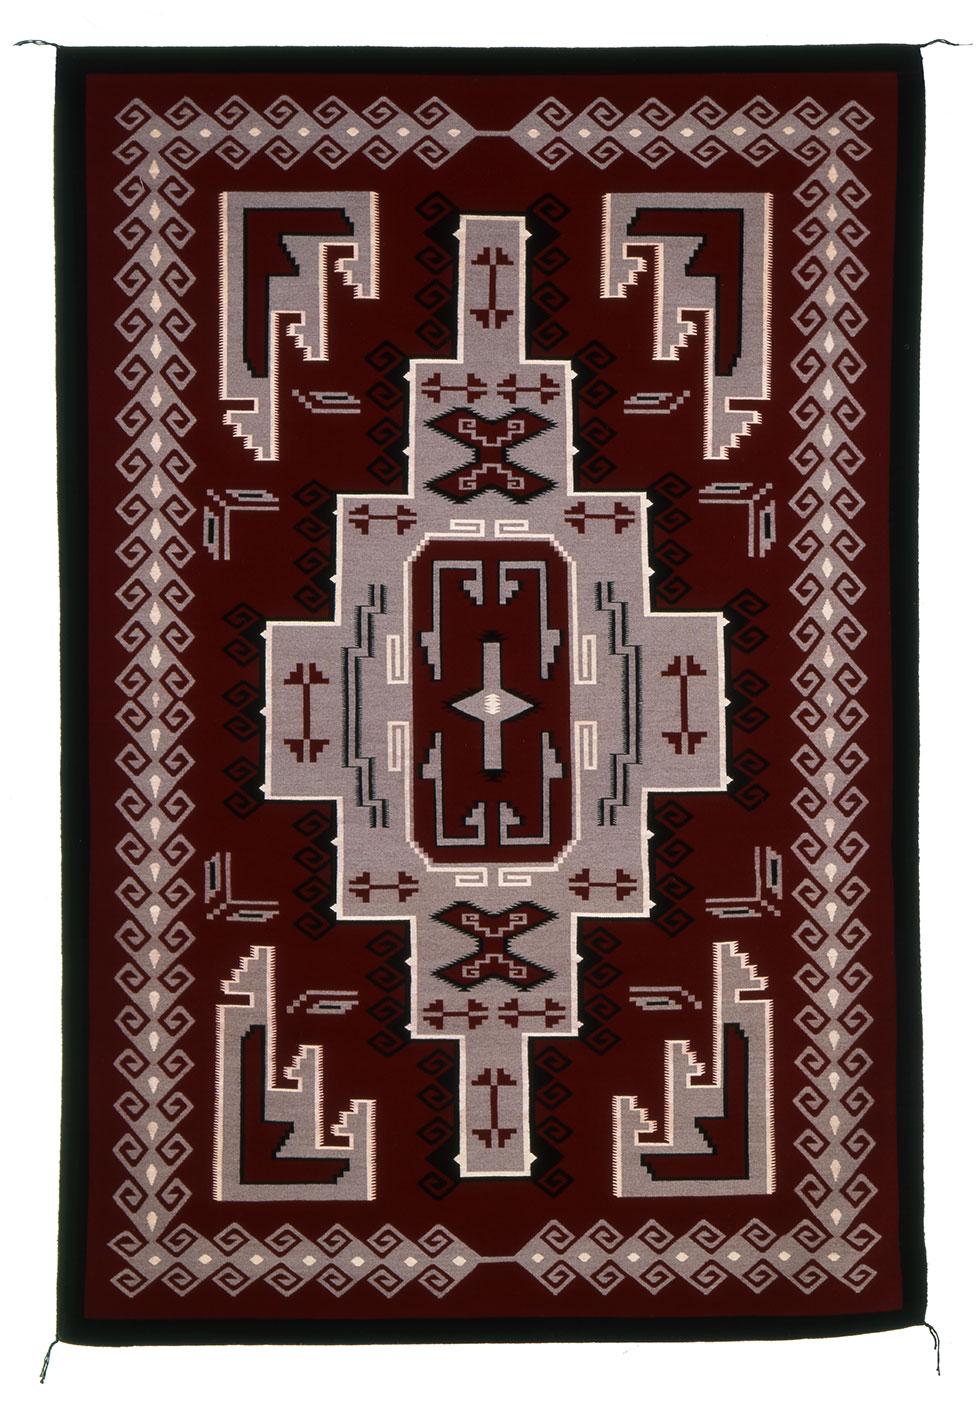 Ganado rug, c. 1988, Betty Joe Yazzie, 105 x 70.5in (266.7 x 179cm), 91.023.125. Gift of Edwin L. and Ruth E. Kennedy.